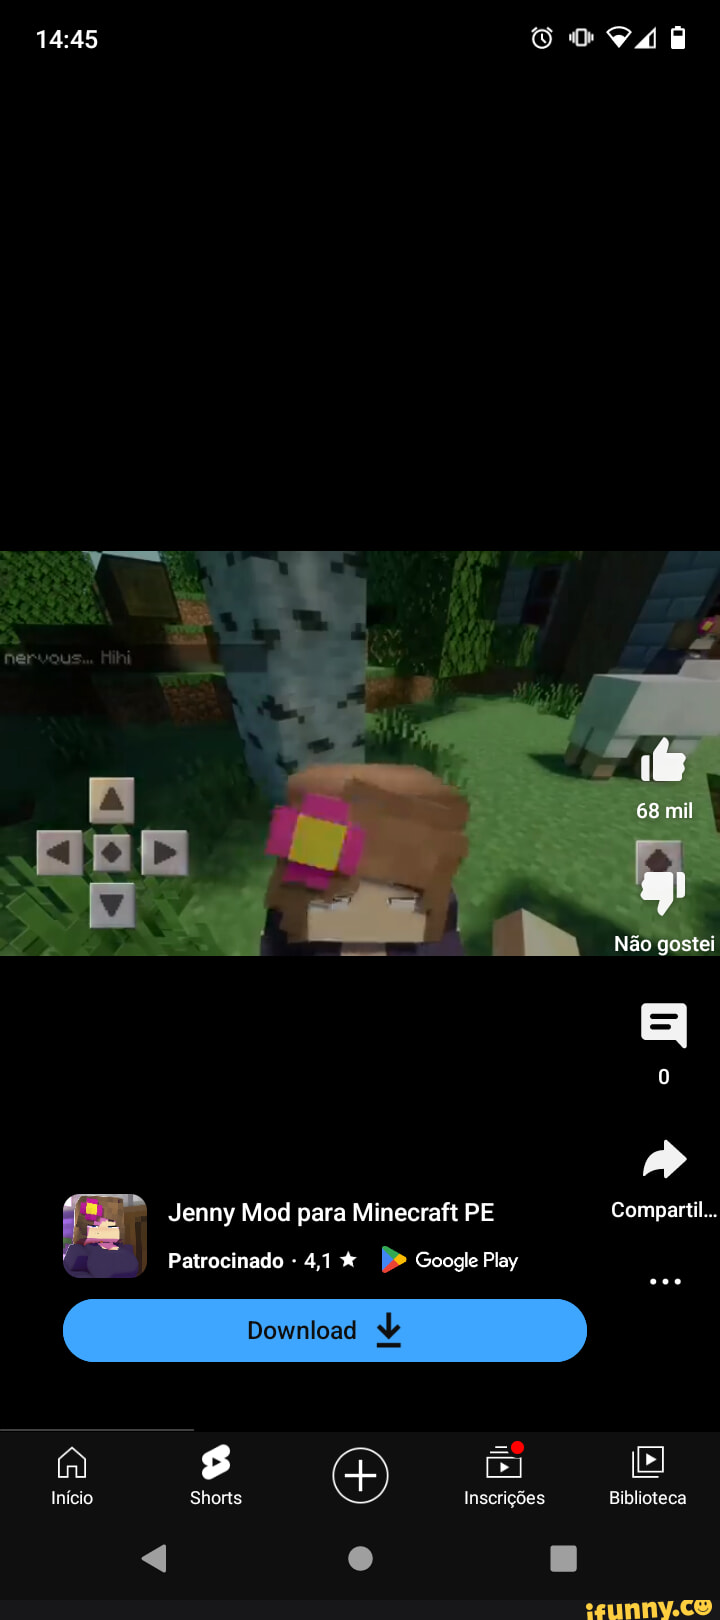 Propaganda do : Youlube al Jogos Jogos de quebra-cabeça mm 19 mil  344 MOD IN Download Jenny mod for Minecraft PE Jenny Mod for Minecraft PE  Anúncio - 4,3% GRÁTIS - iFunny Brazil